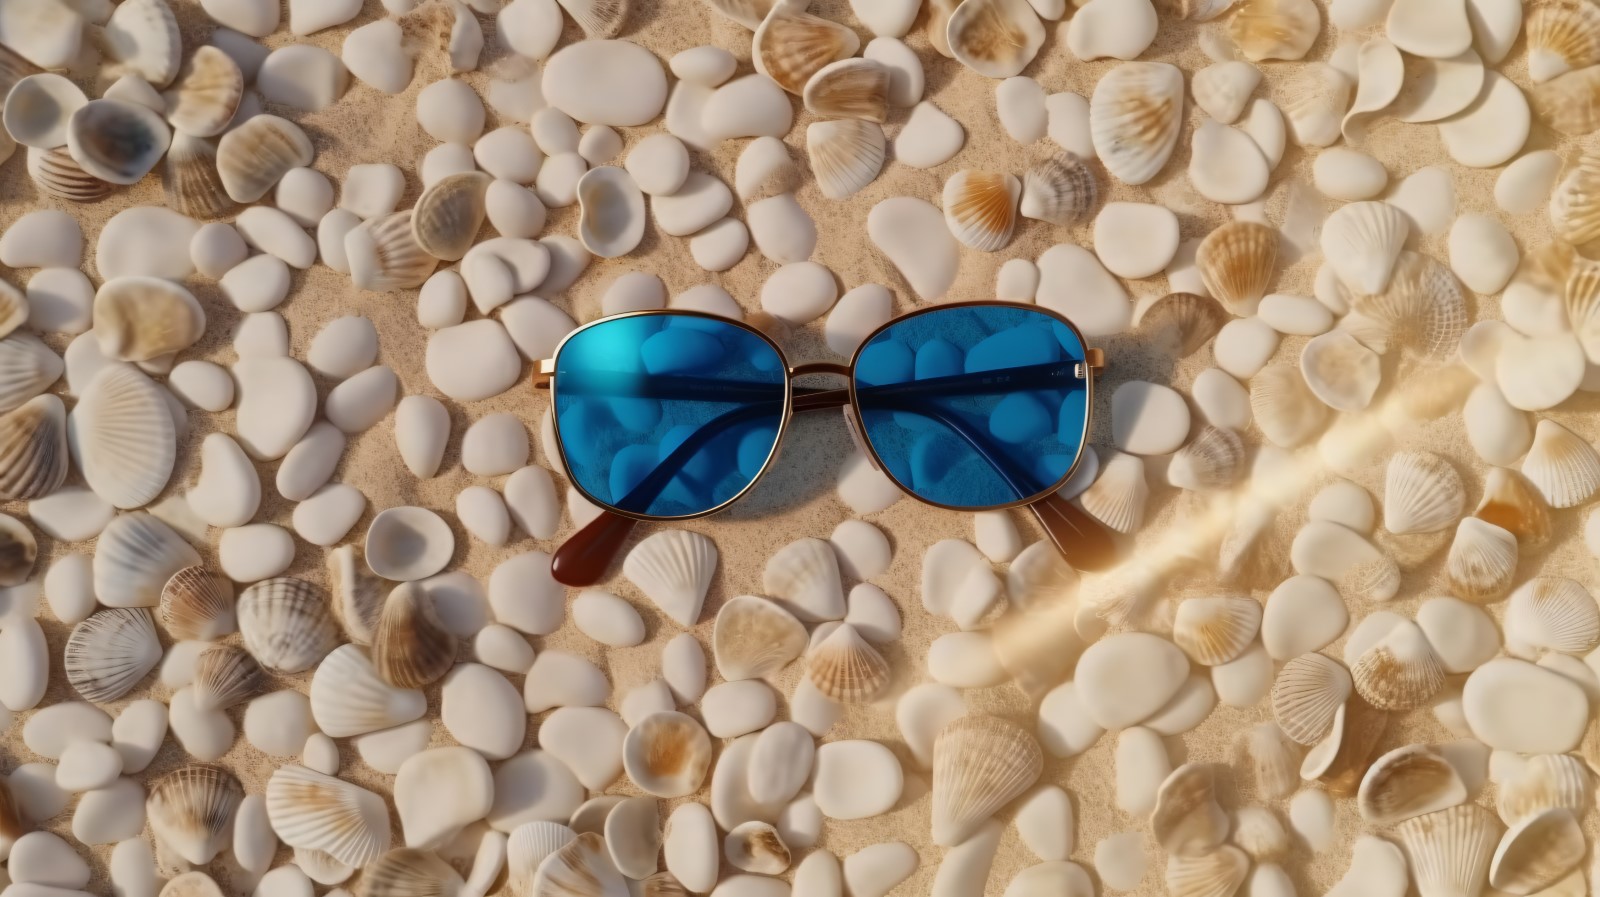 Sunglasses seashells and beach accessories on sandy beach 198